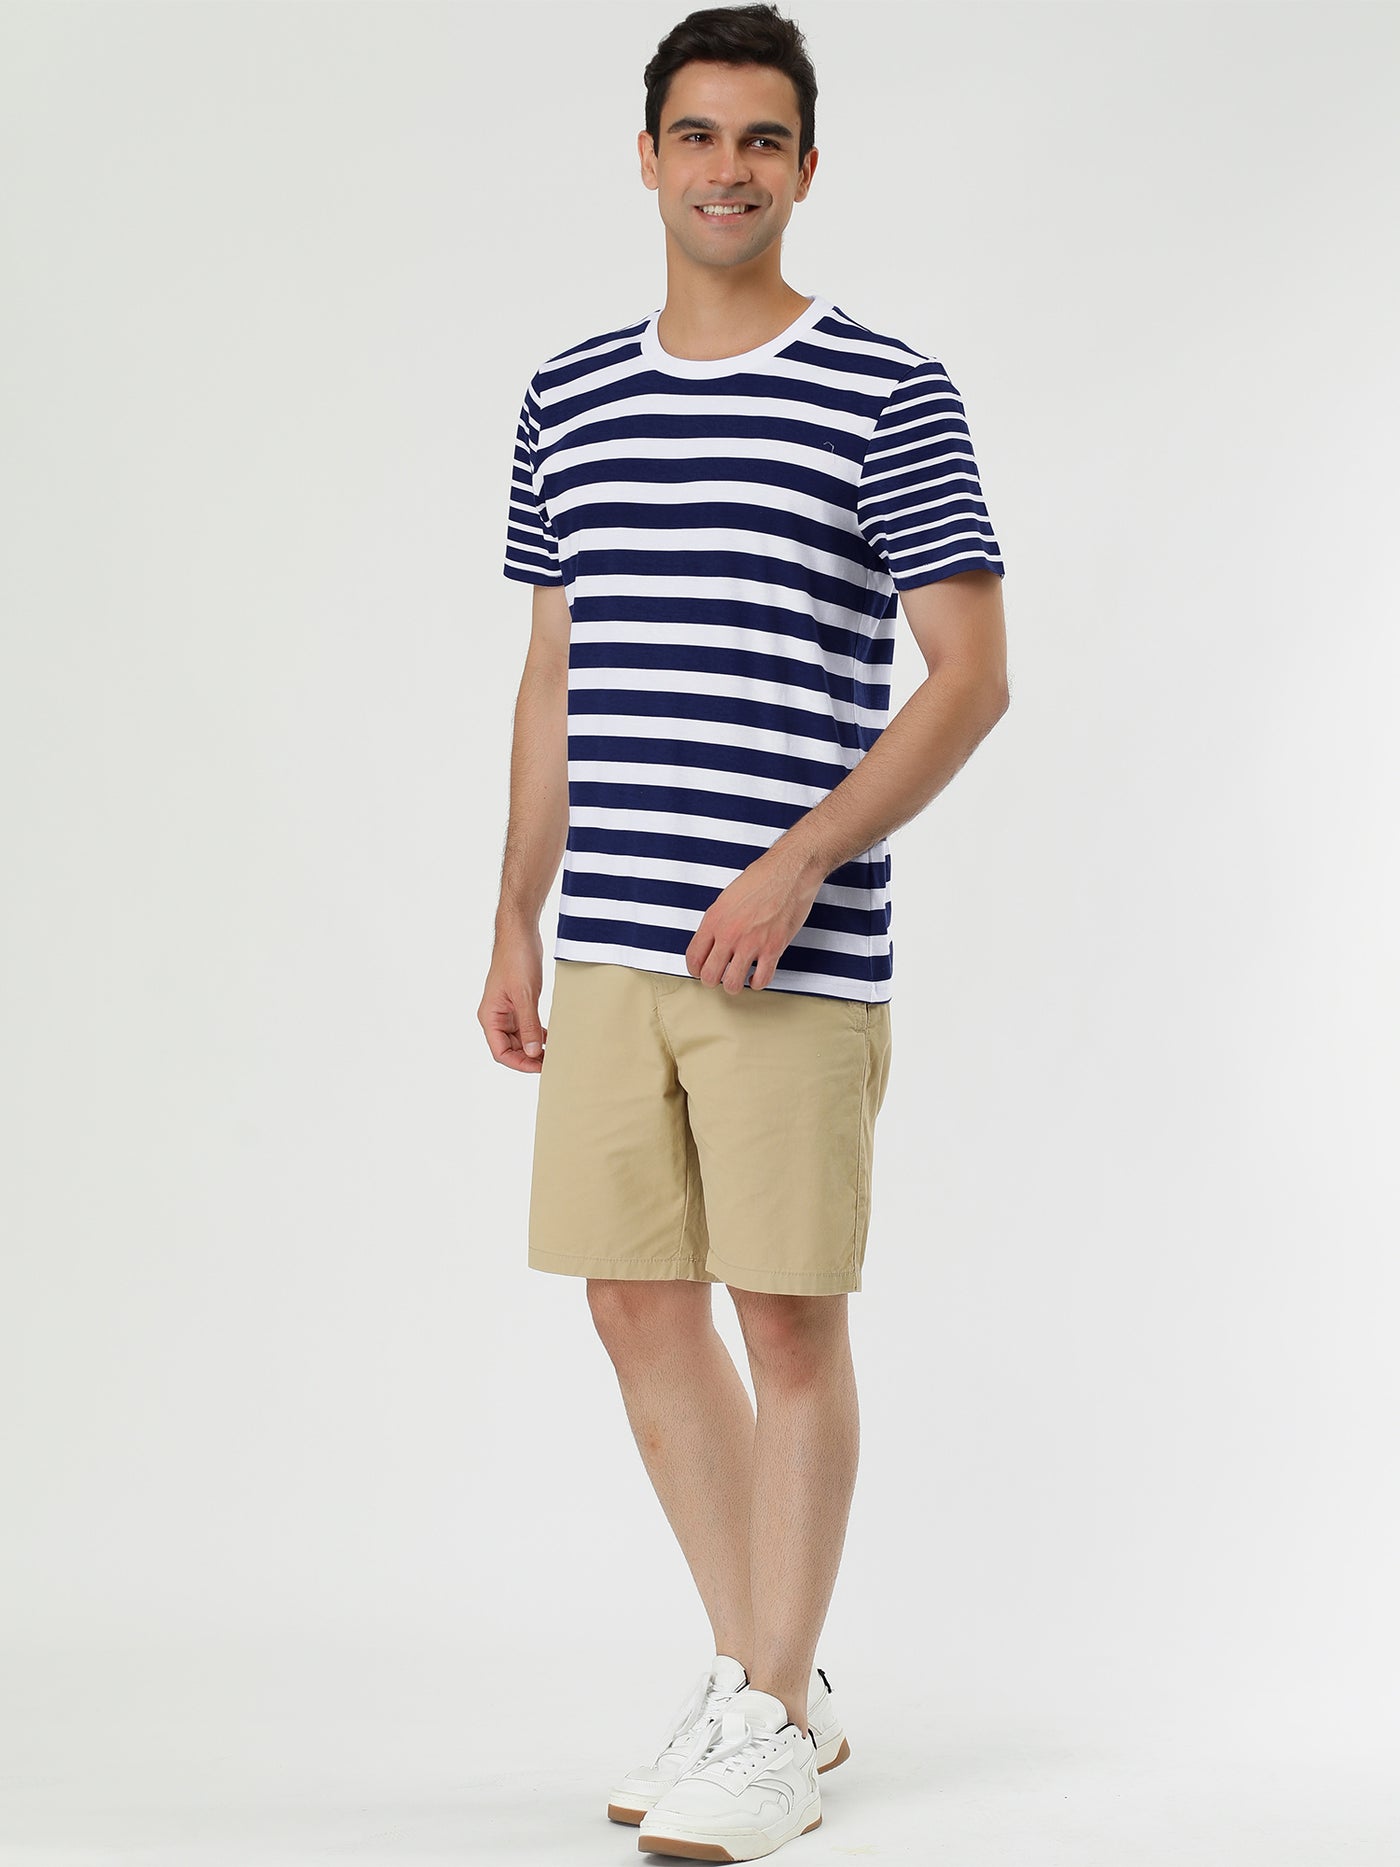 Bublédon Chic Striped Crewneck Short Sleeve Summer T-Shirts